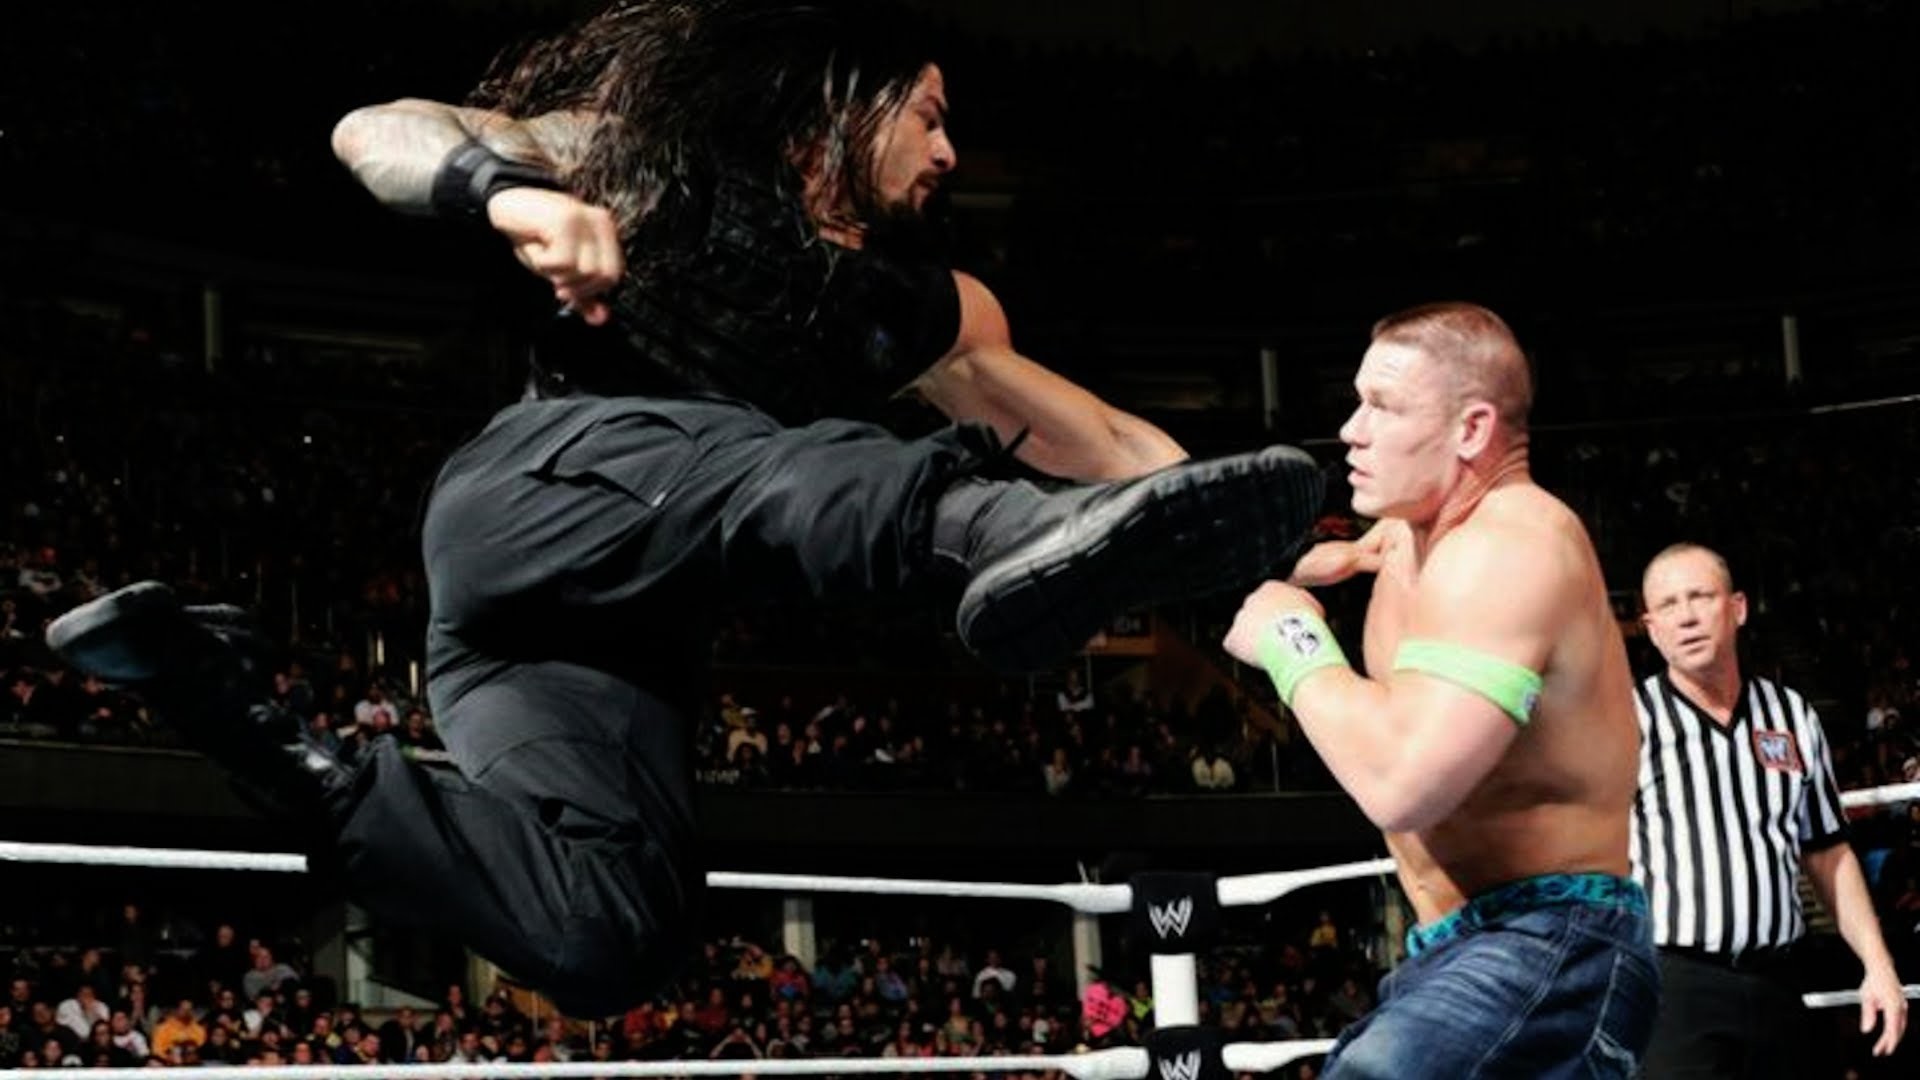 1920x1080 WWE Battleground 2014 - John Cena vs. Kane vs. Randy Orton vs. Roman Reigns  - Fatal 4-Way Match - YouTube